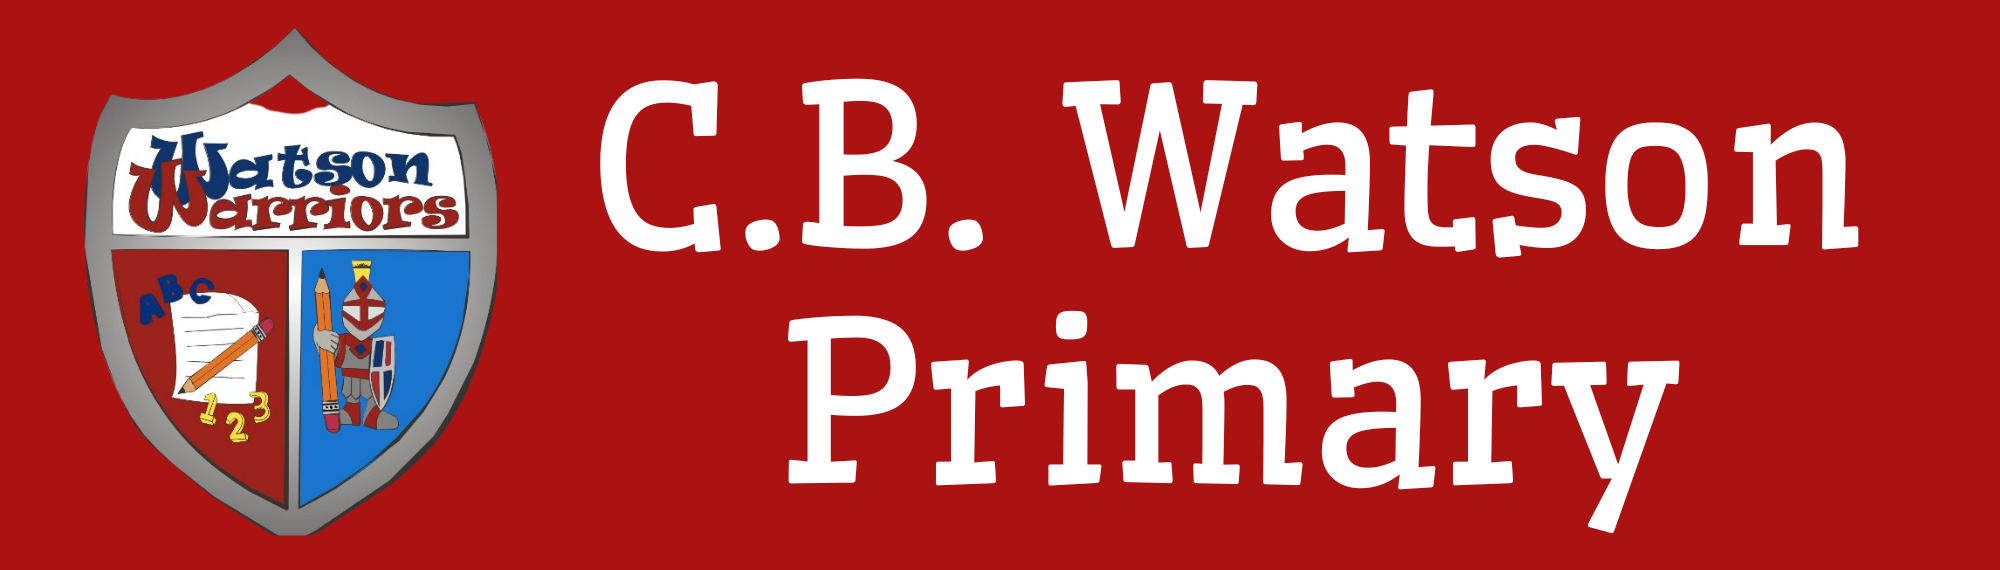 C.B. Watson Primary